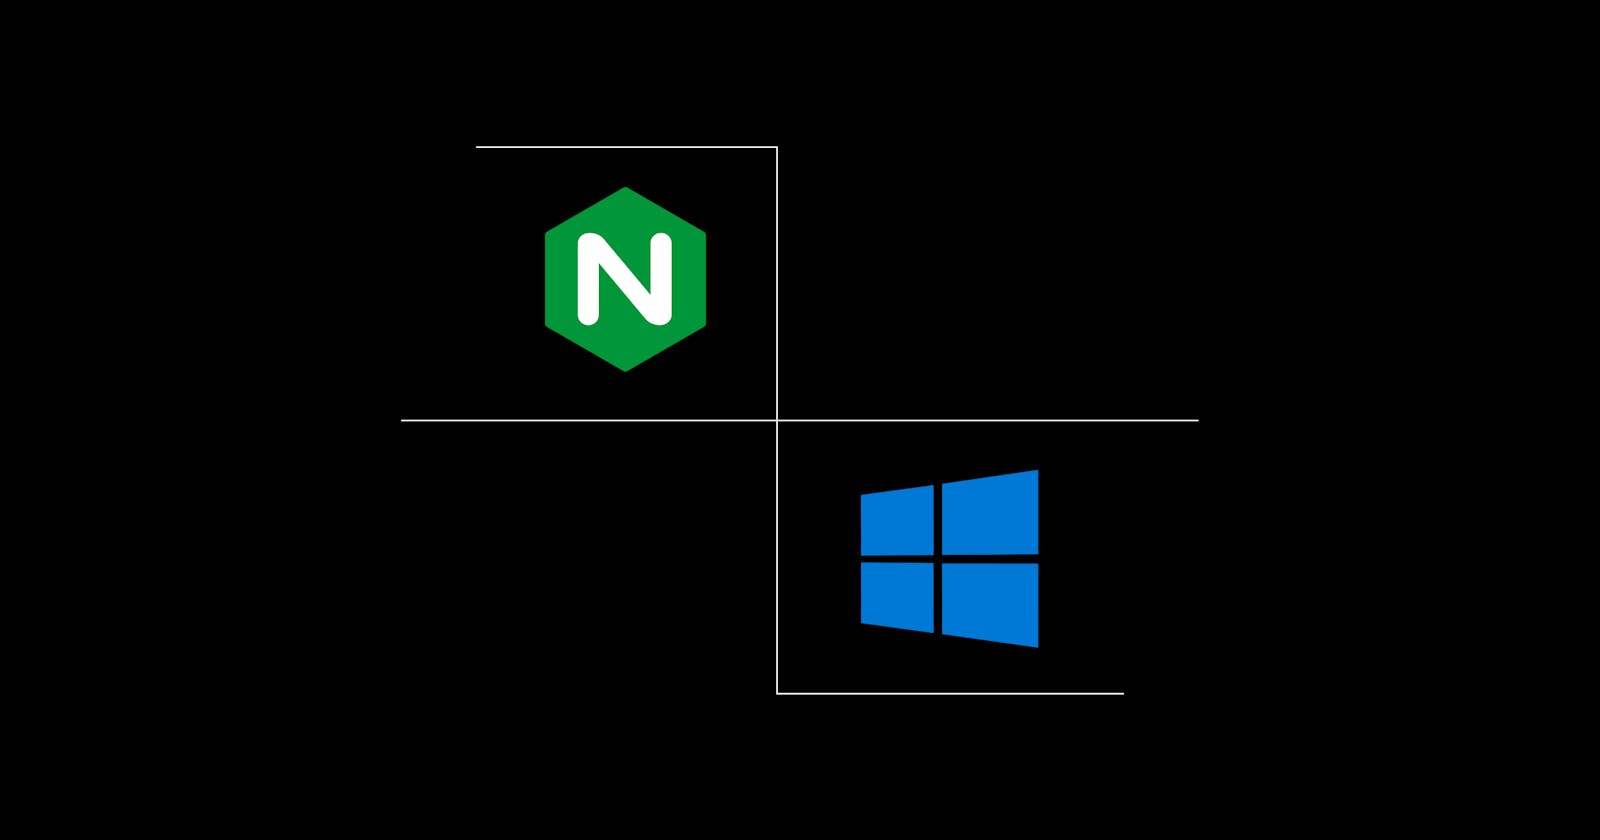 Installing Nginx on Windows